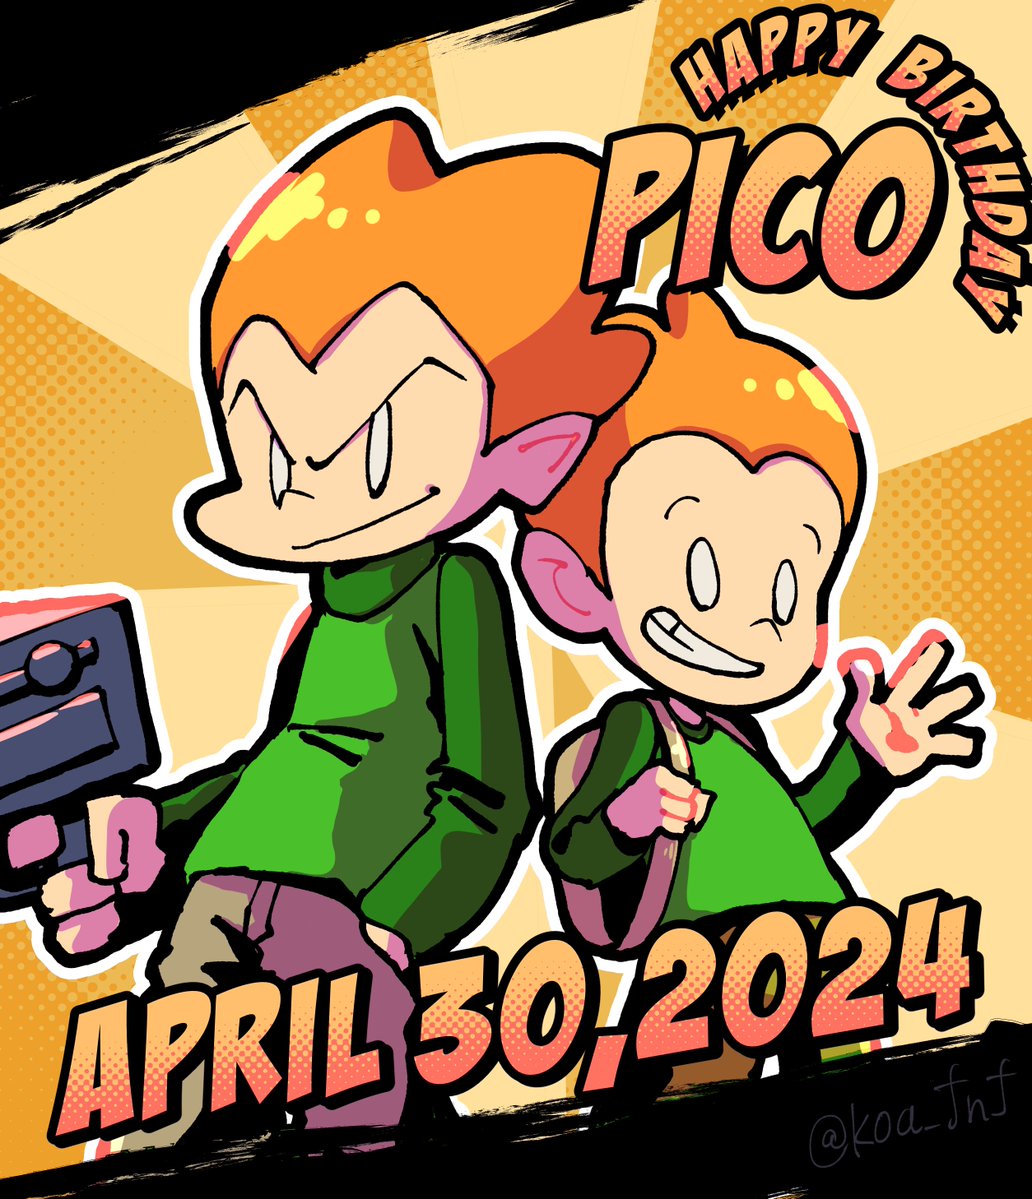 Happy birthday Pico‼️

#Pico
#fridaynightfunkin
#picosschool